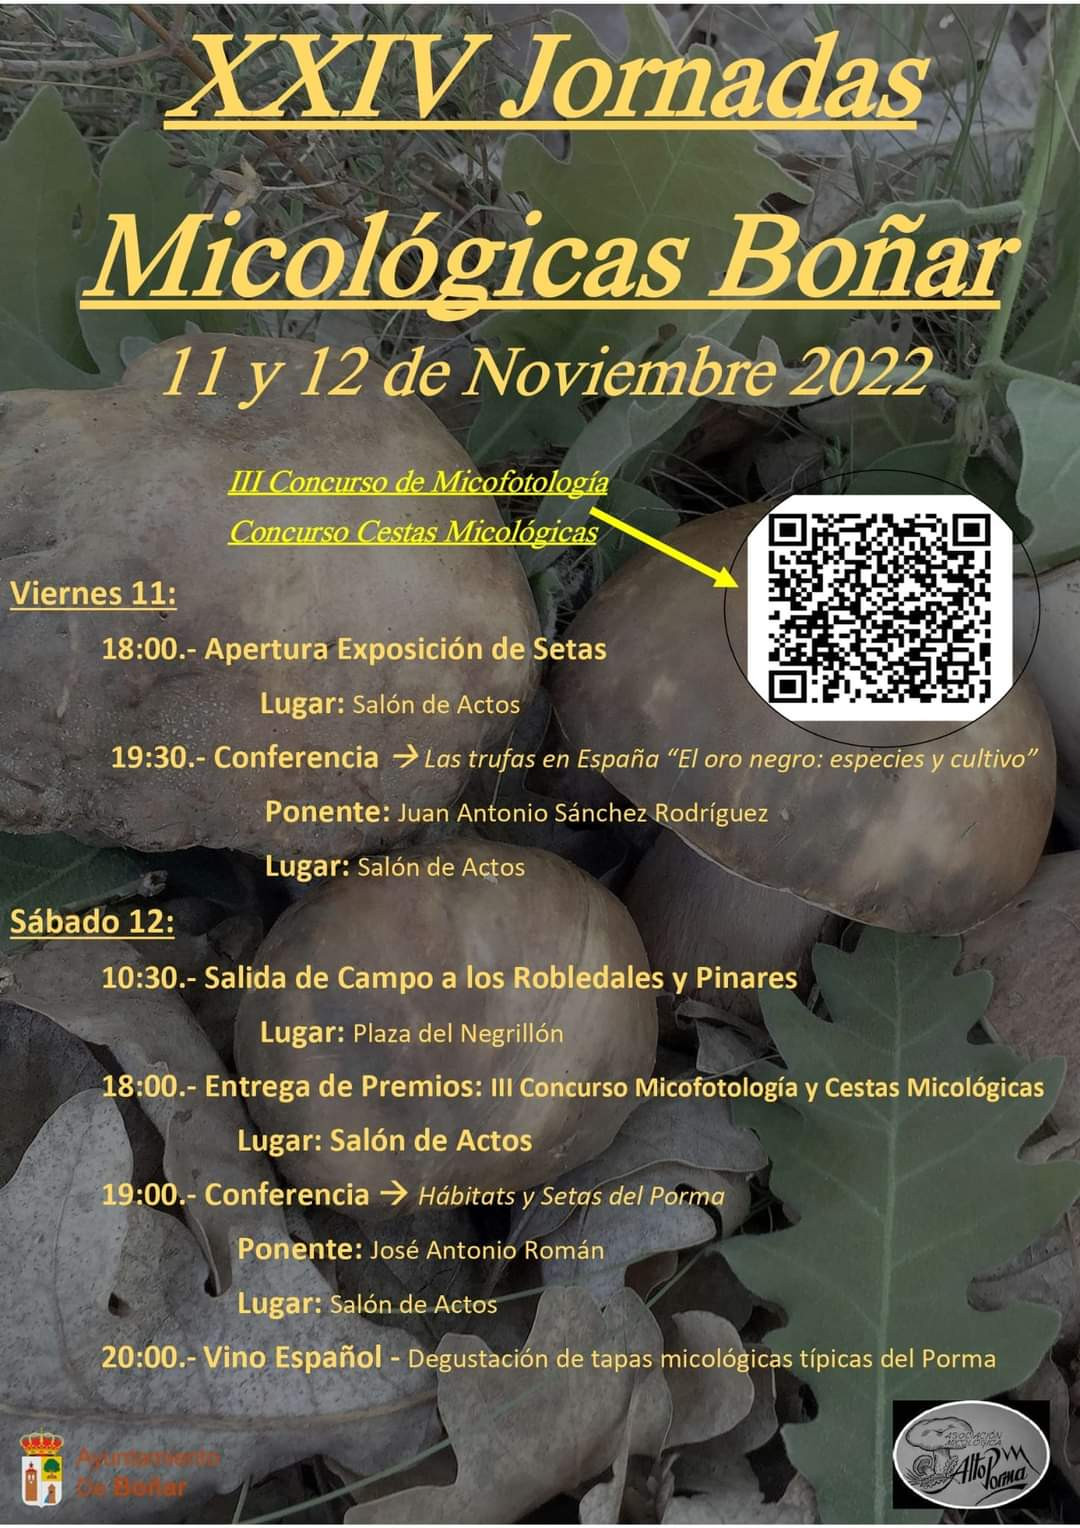 Jornadas micologicas bou00f1ar cartel